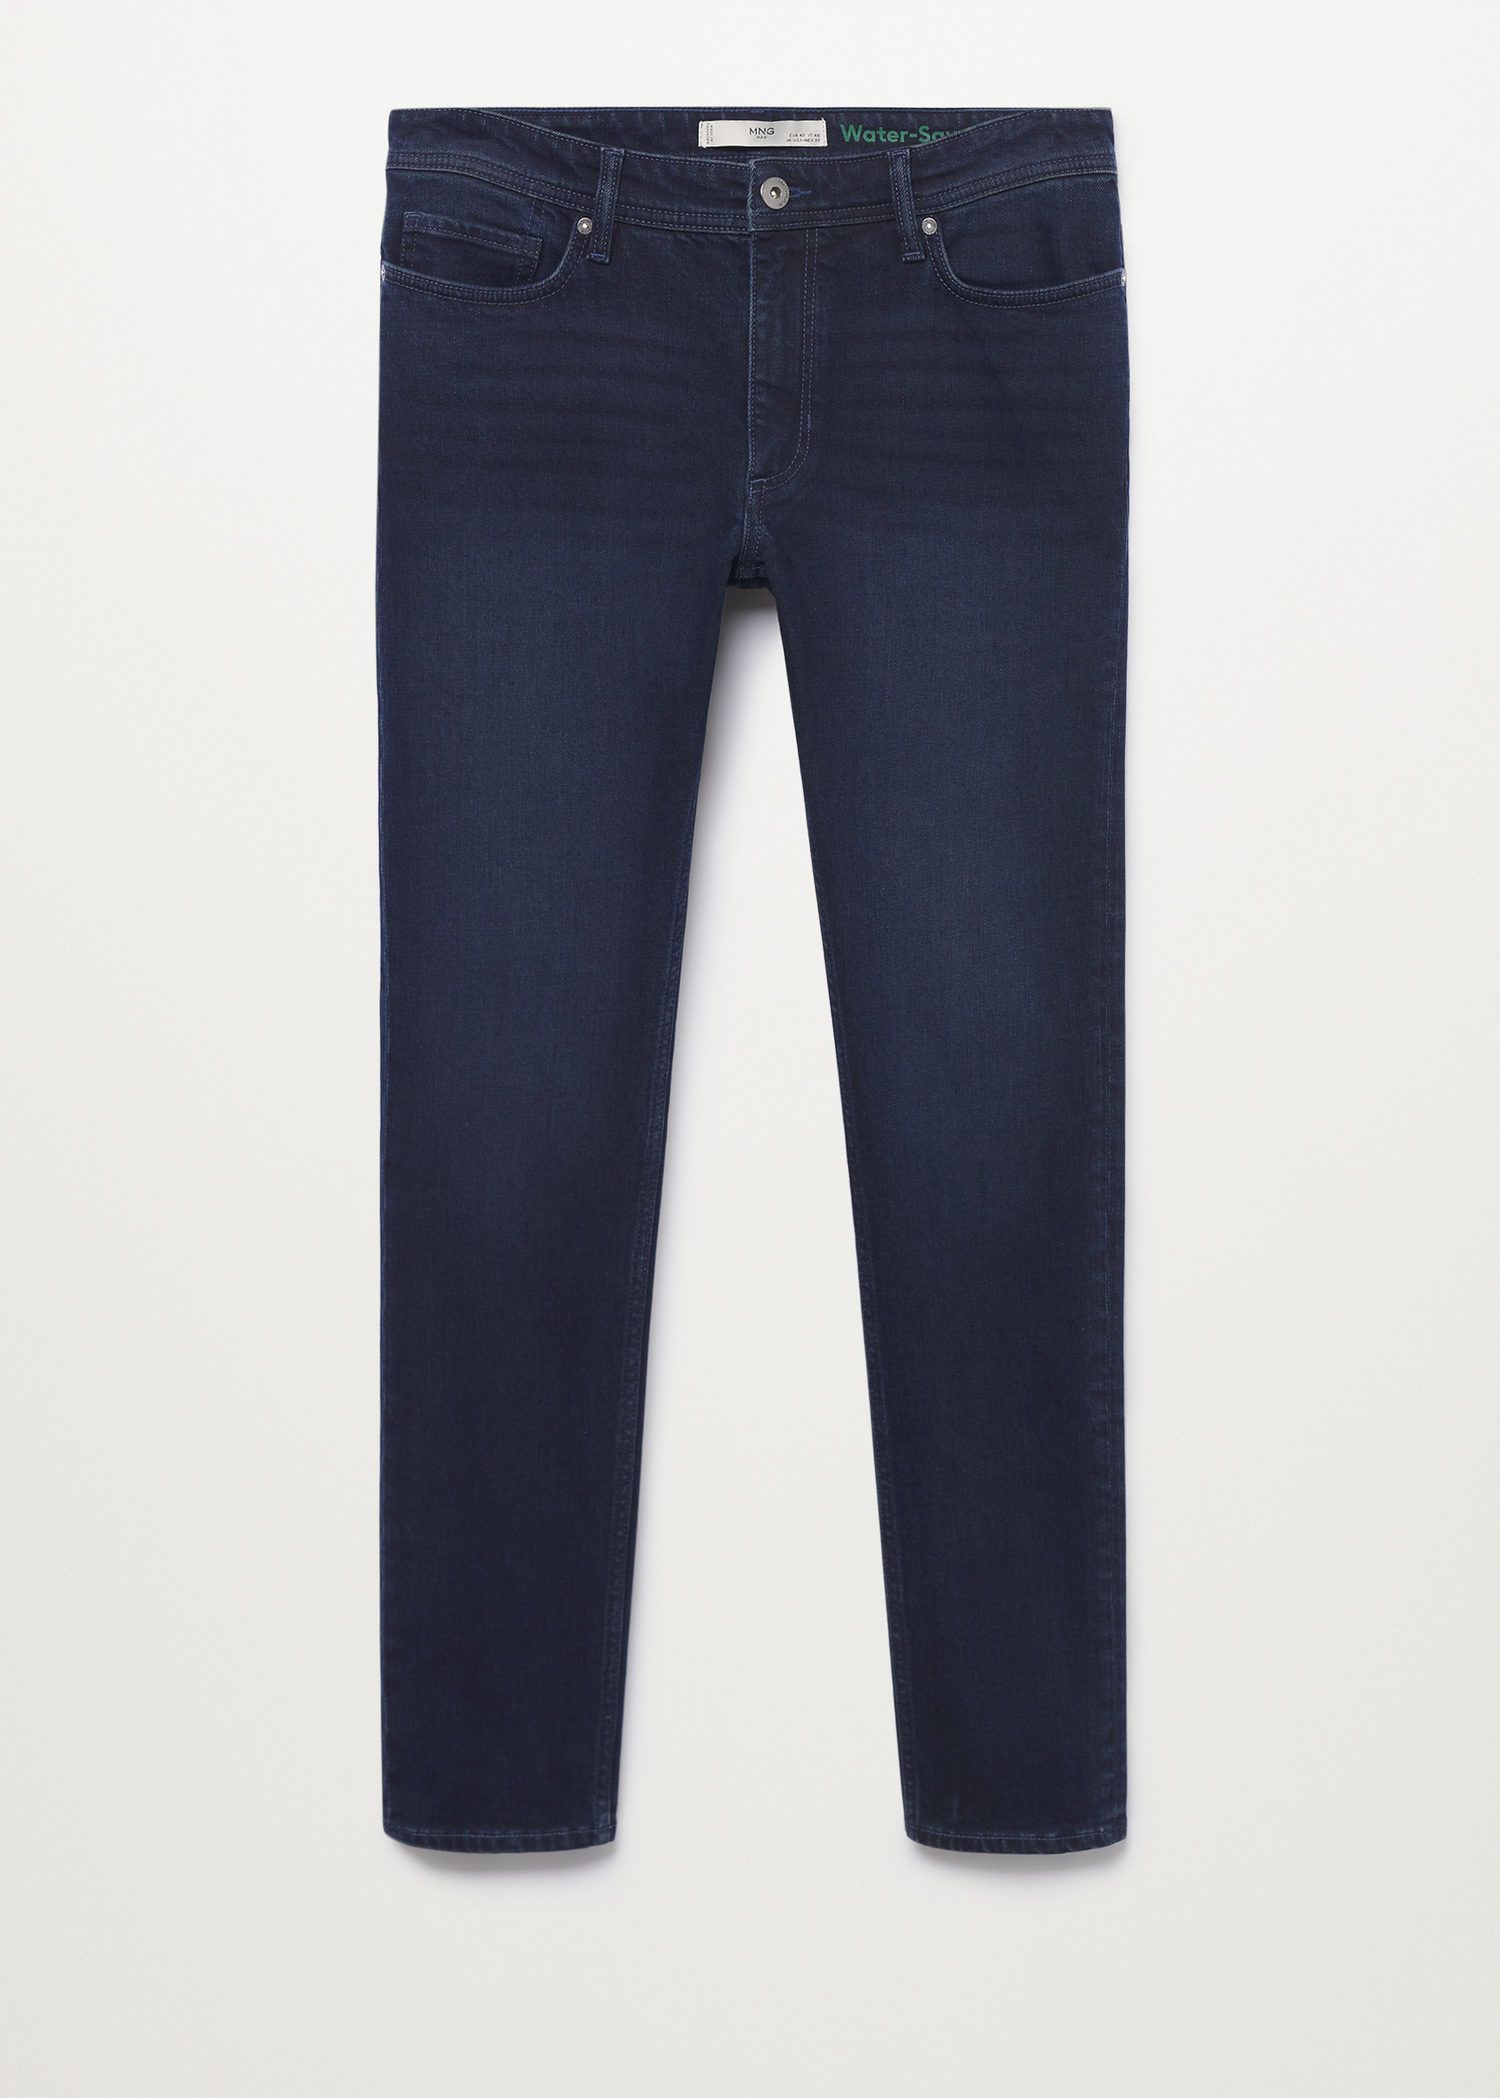 Mango Slim-Fit Faded Wash Jan Jeans